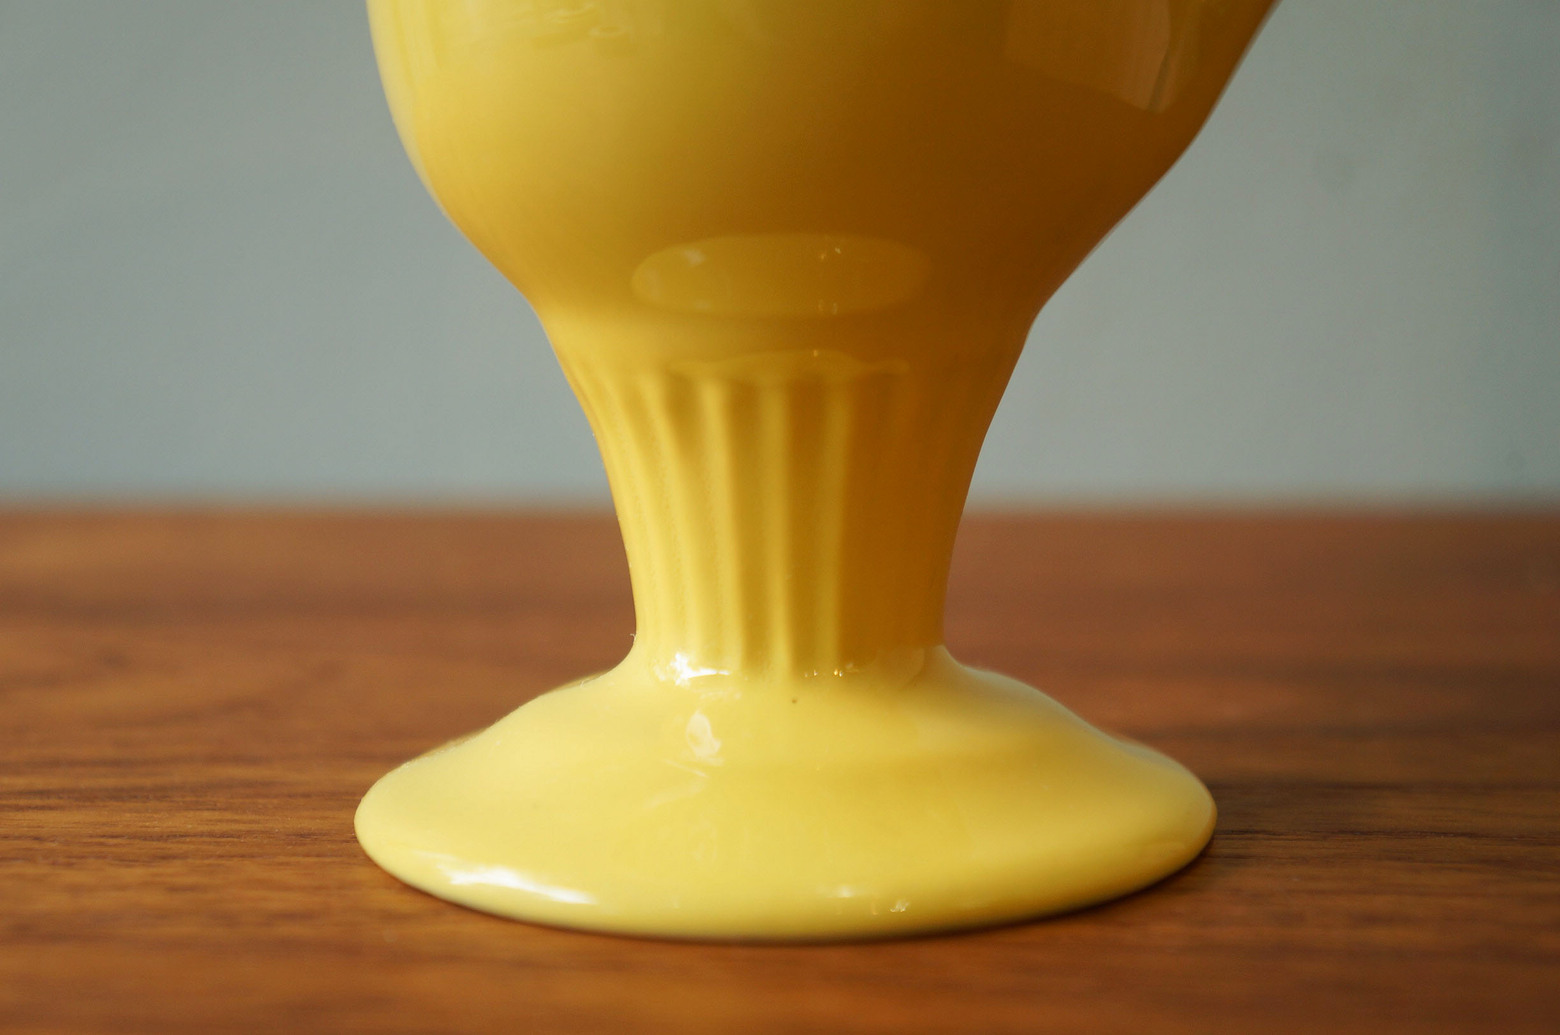 US Vintage Shenango Pedestal Mug Cup/アメリカヴィンテージ シェナンゴ マグカップ 陶器 食器 ミッドセンチュリー レトロ 3